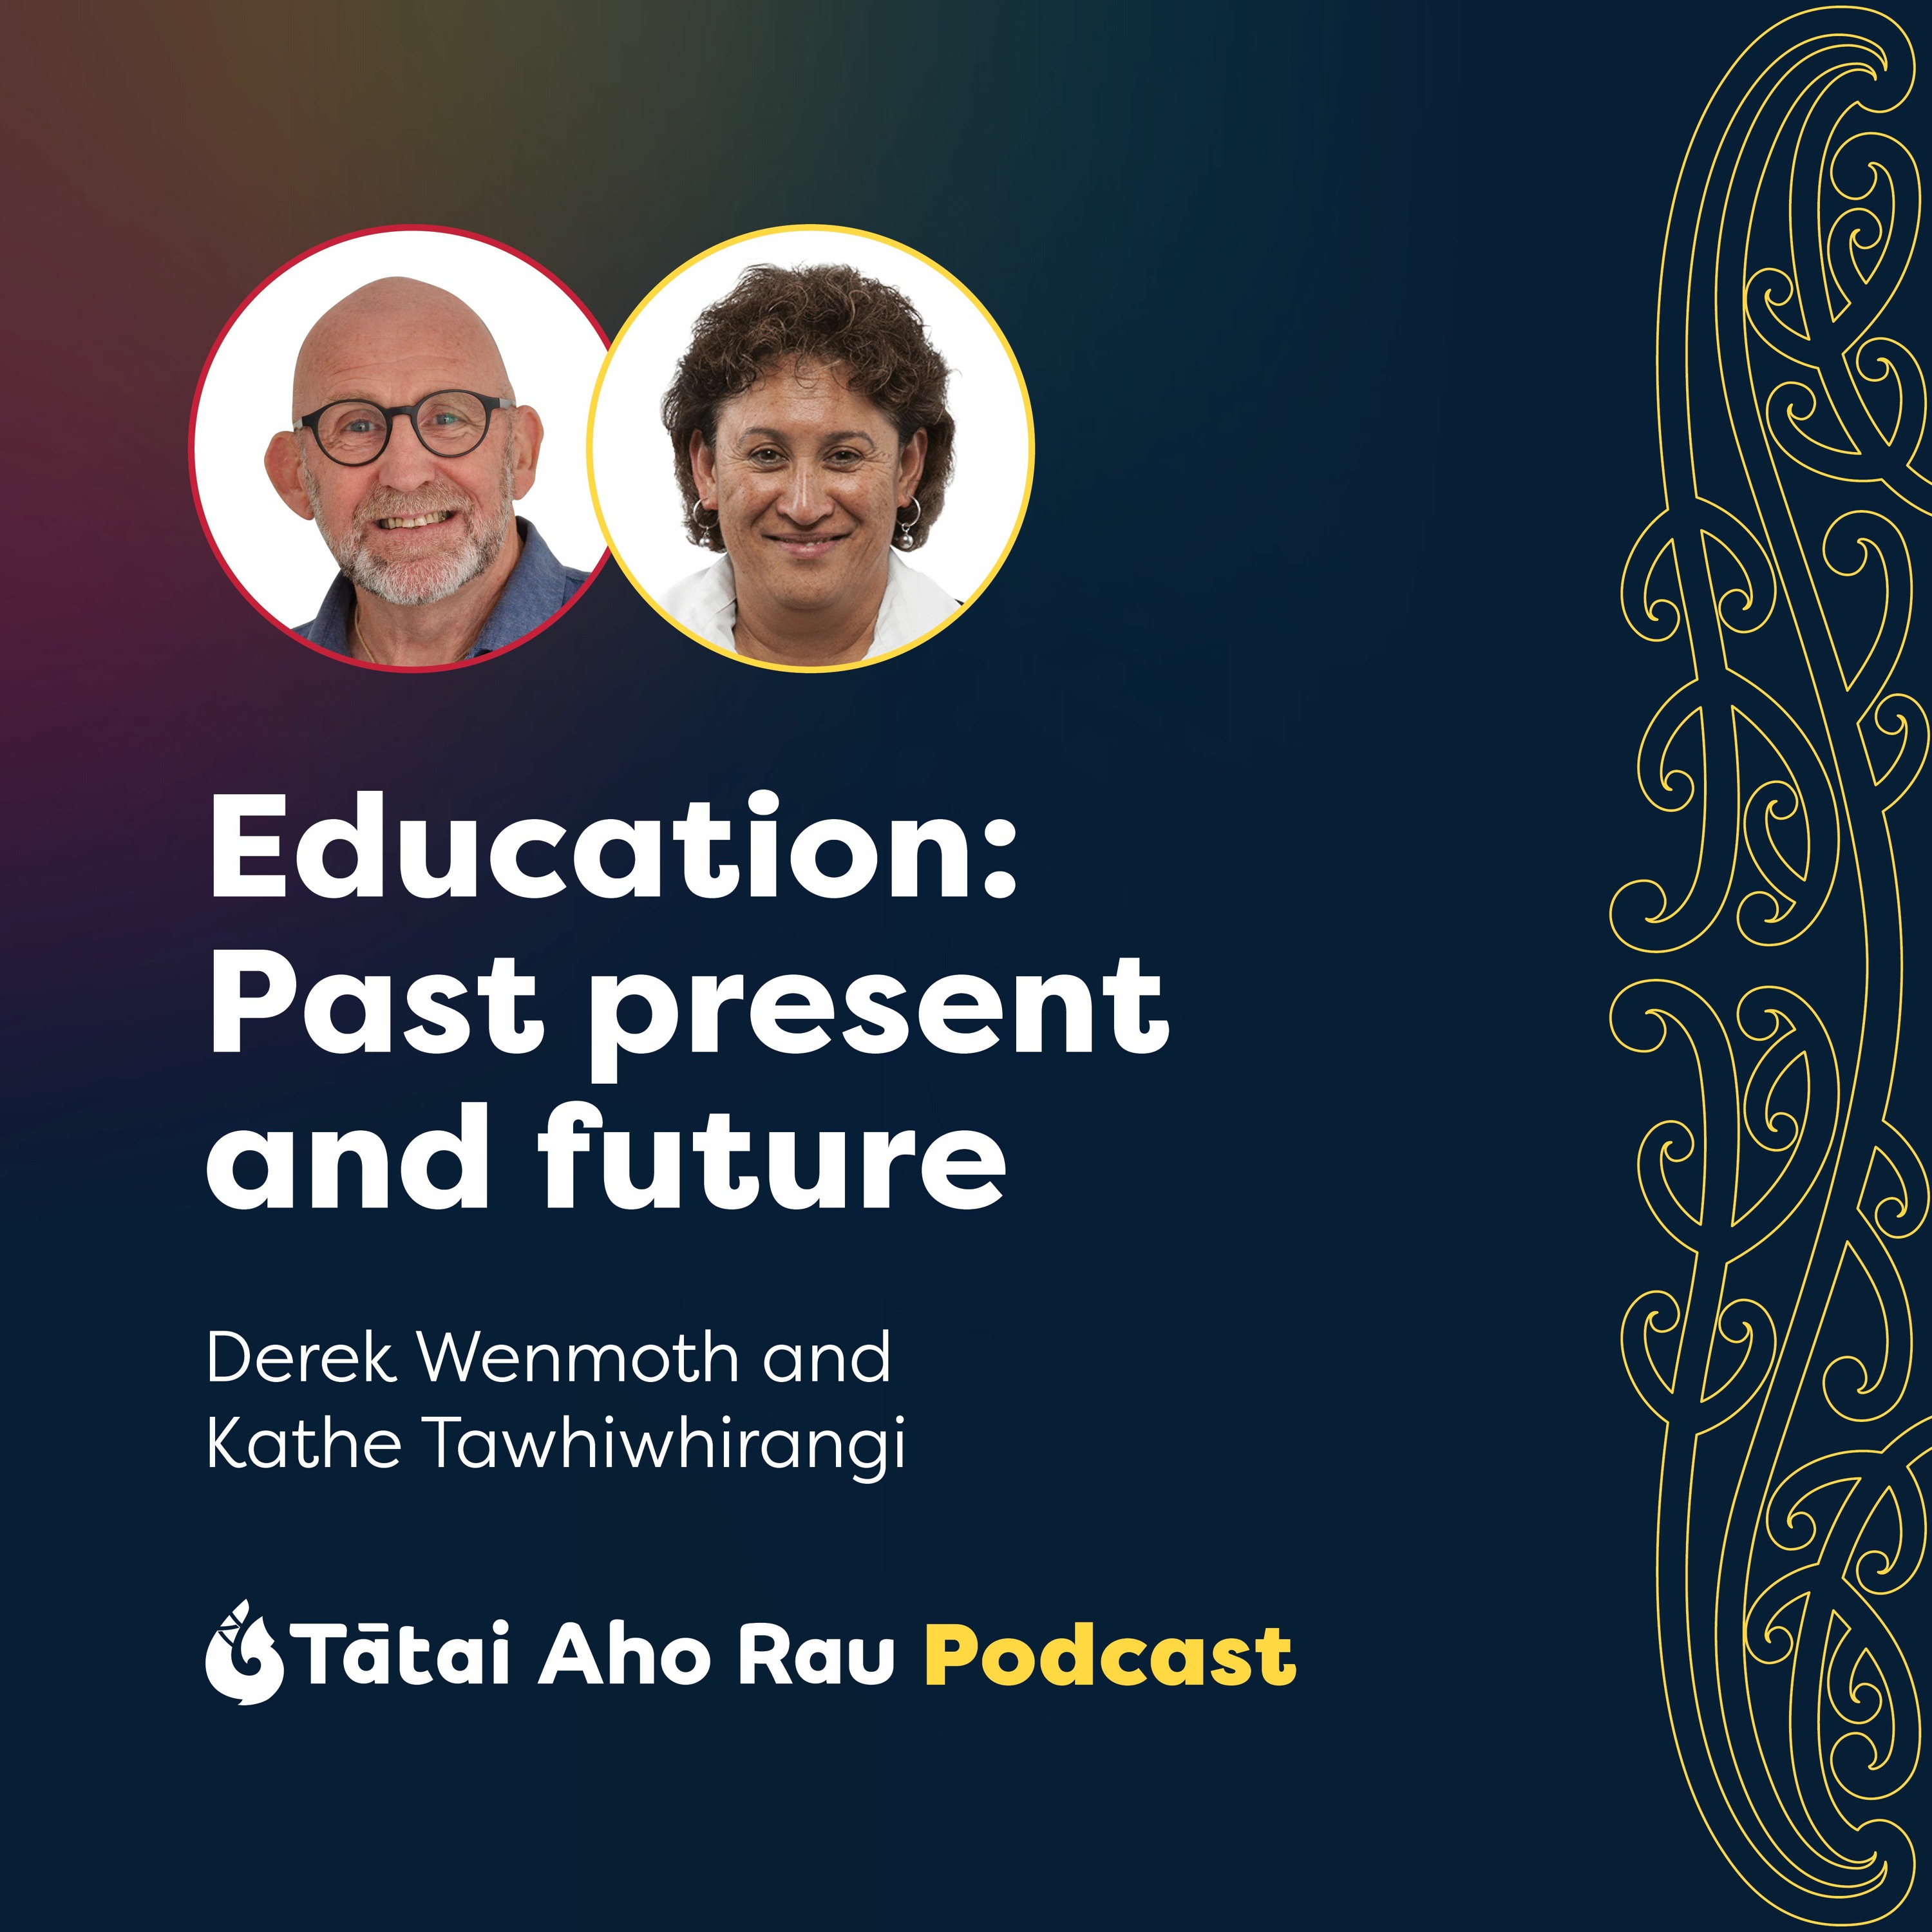 Education: Past, present and future - Derek Wenmoth and Kathe Tawhiwhirangi